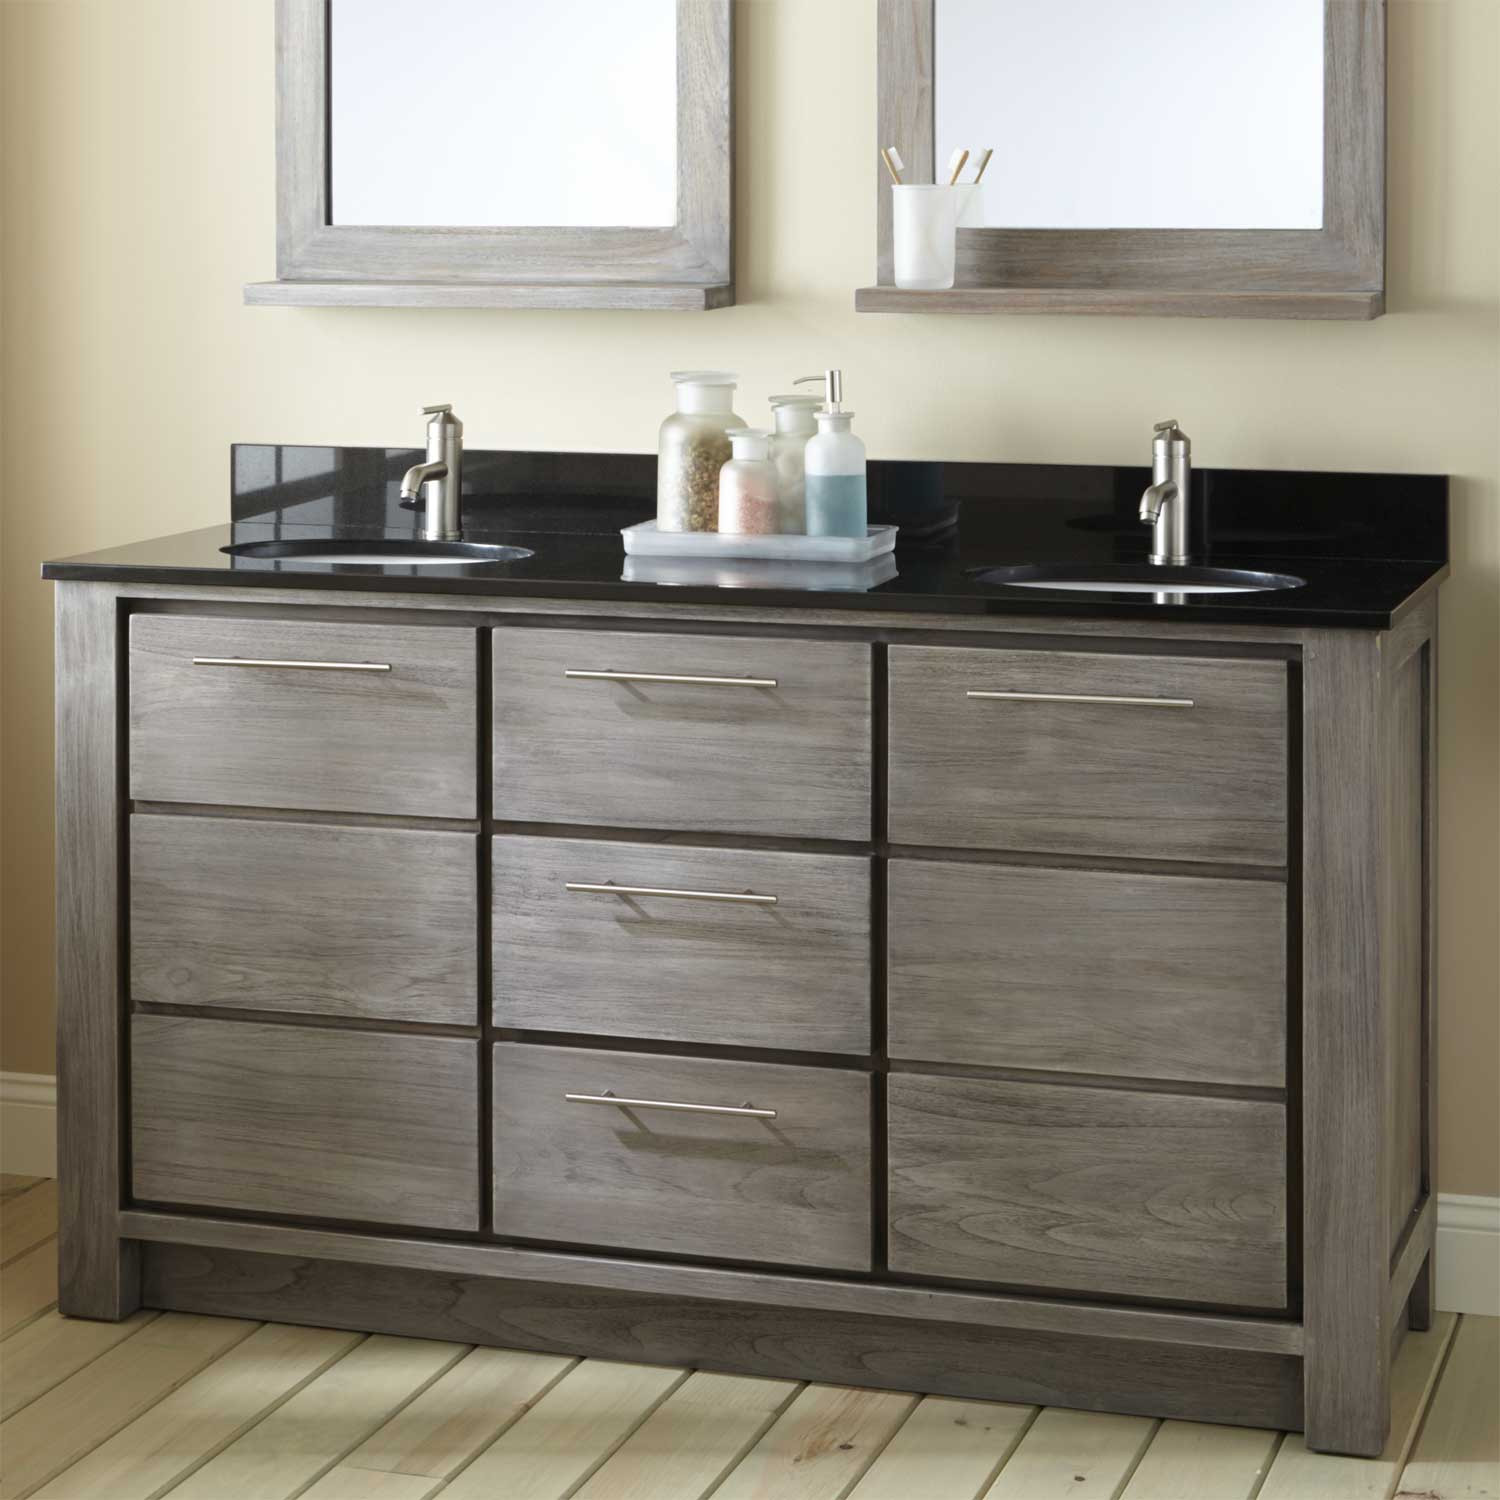 Bathroom Sink With Vanity
 72" Venica Teak Double Vessel Sinks Vanity Gray Wash